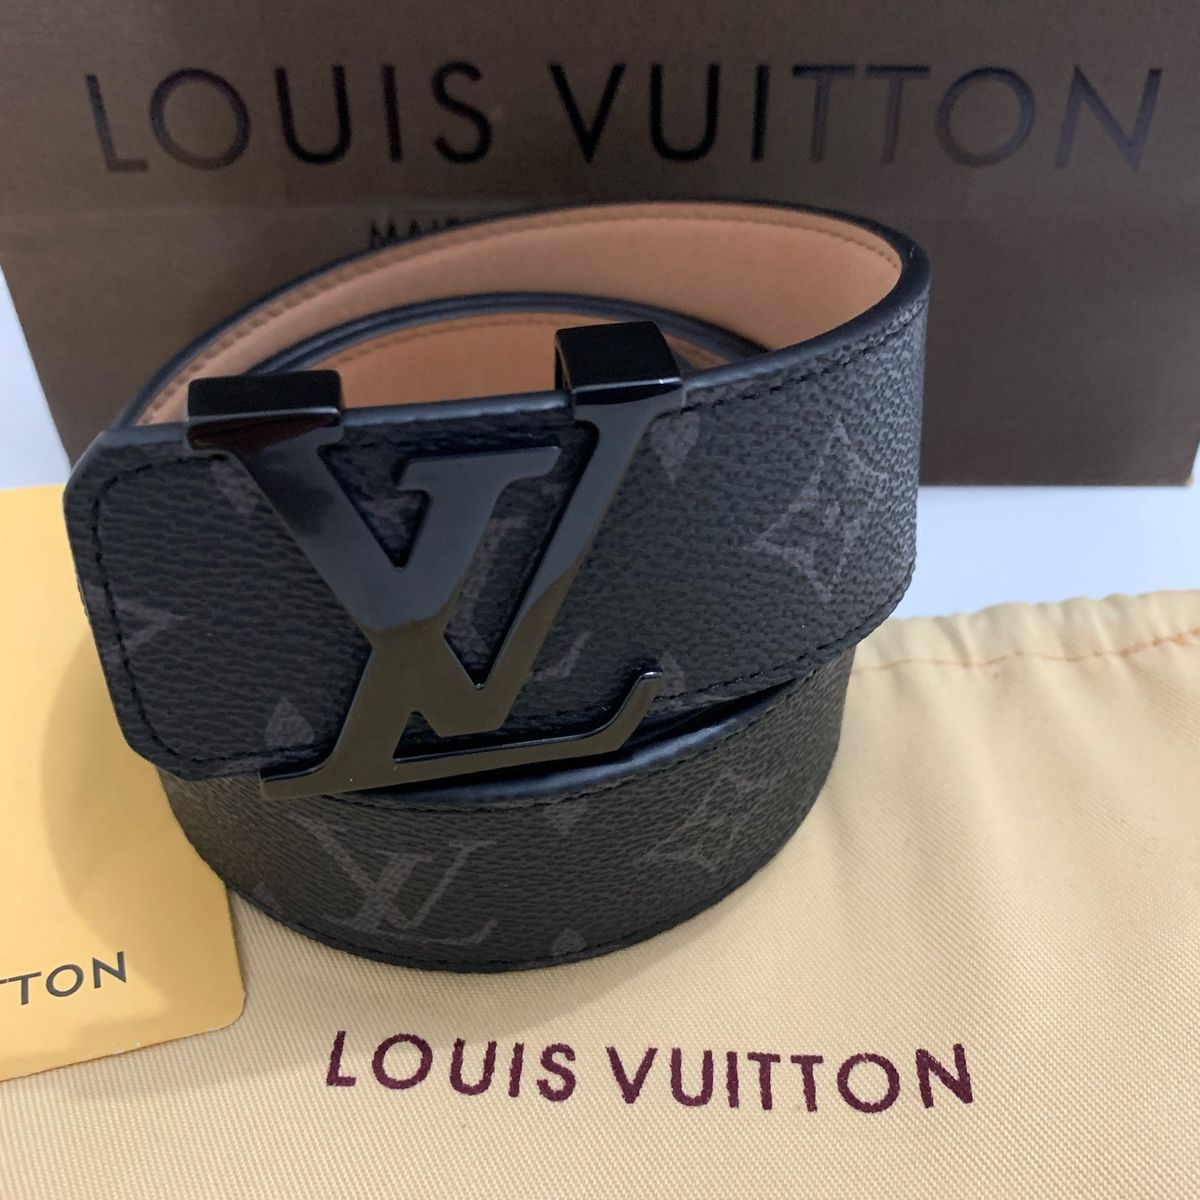 Tênis Louis Vuitton em Couro com Monograma | Tênis Masculino Louis Vuitton  Usado 82171077 | enjoei